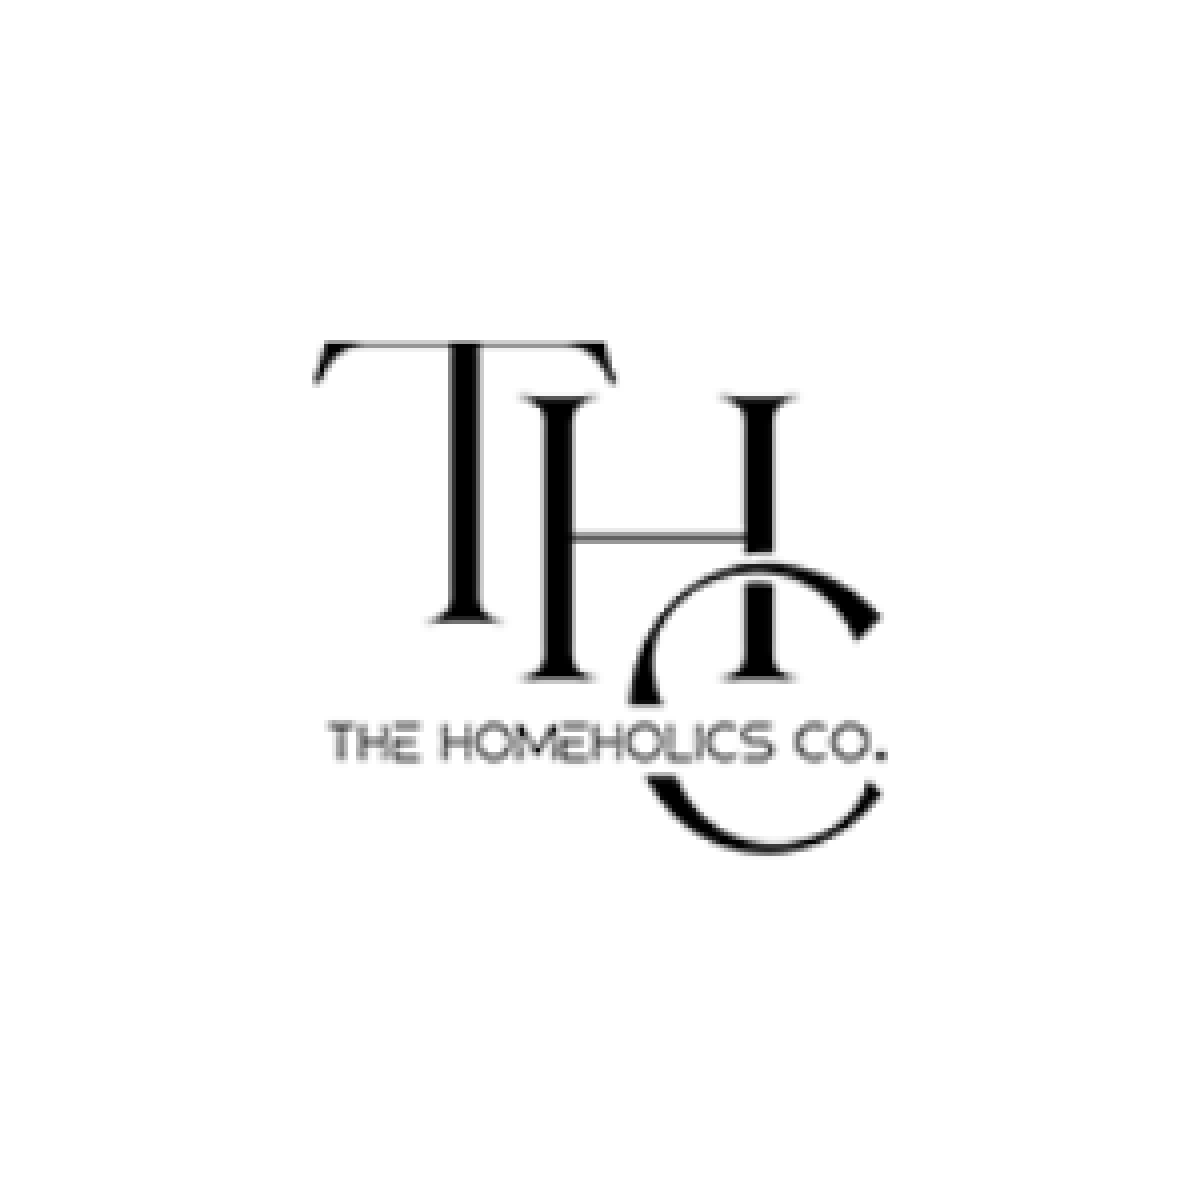 The Home holics